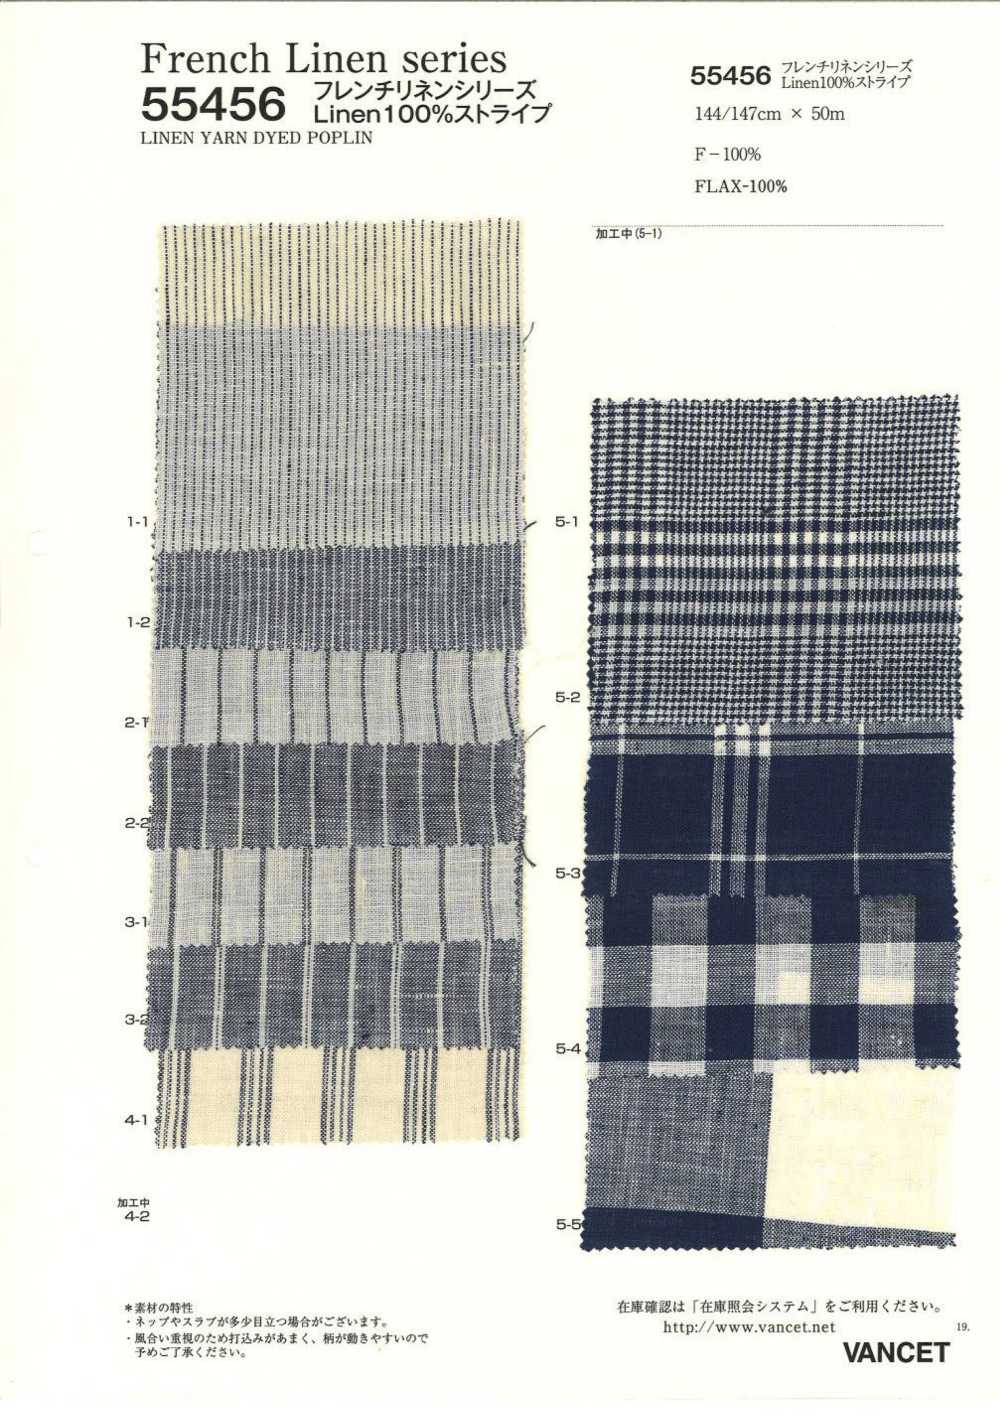 55456 Lino Francés Serie Lino100% Rayas[Fabrica Textil] VANCET